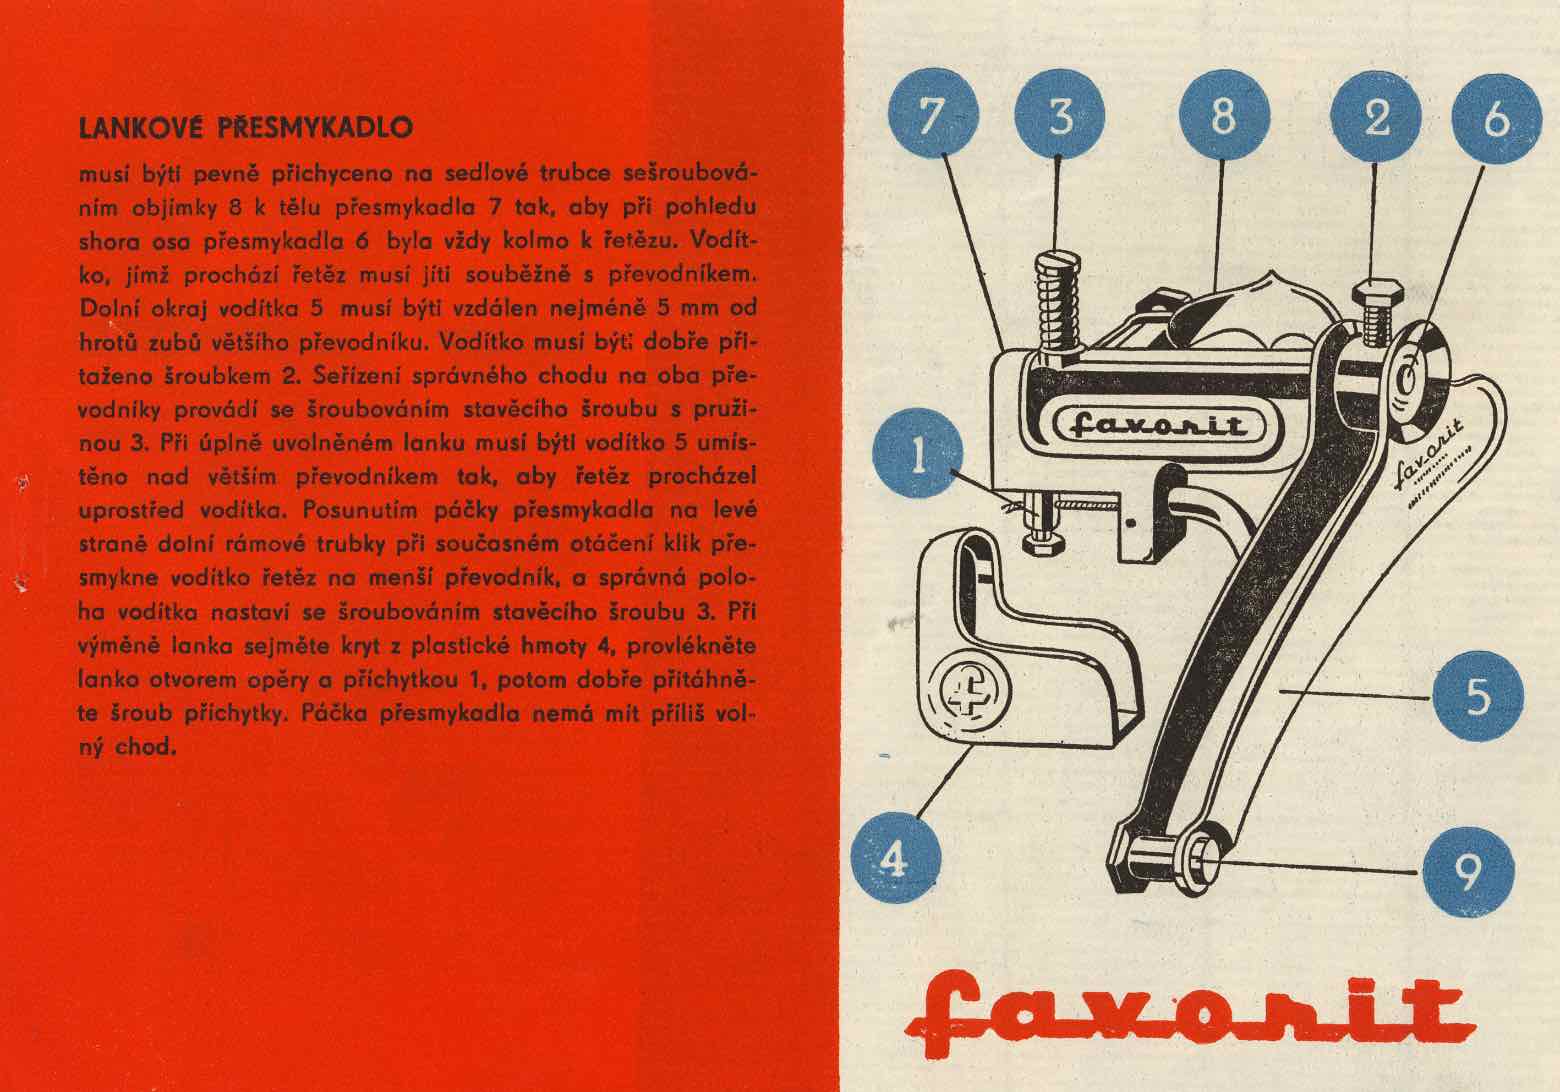 ESKA Favorit - instructions 1967 scan 9 main image